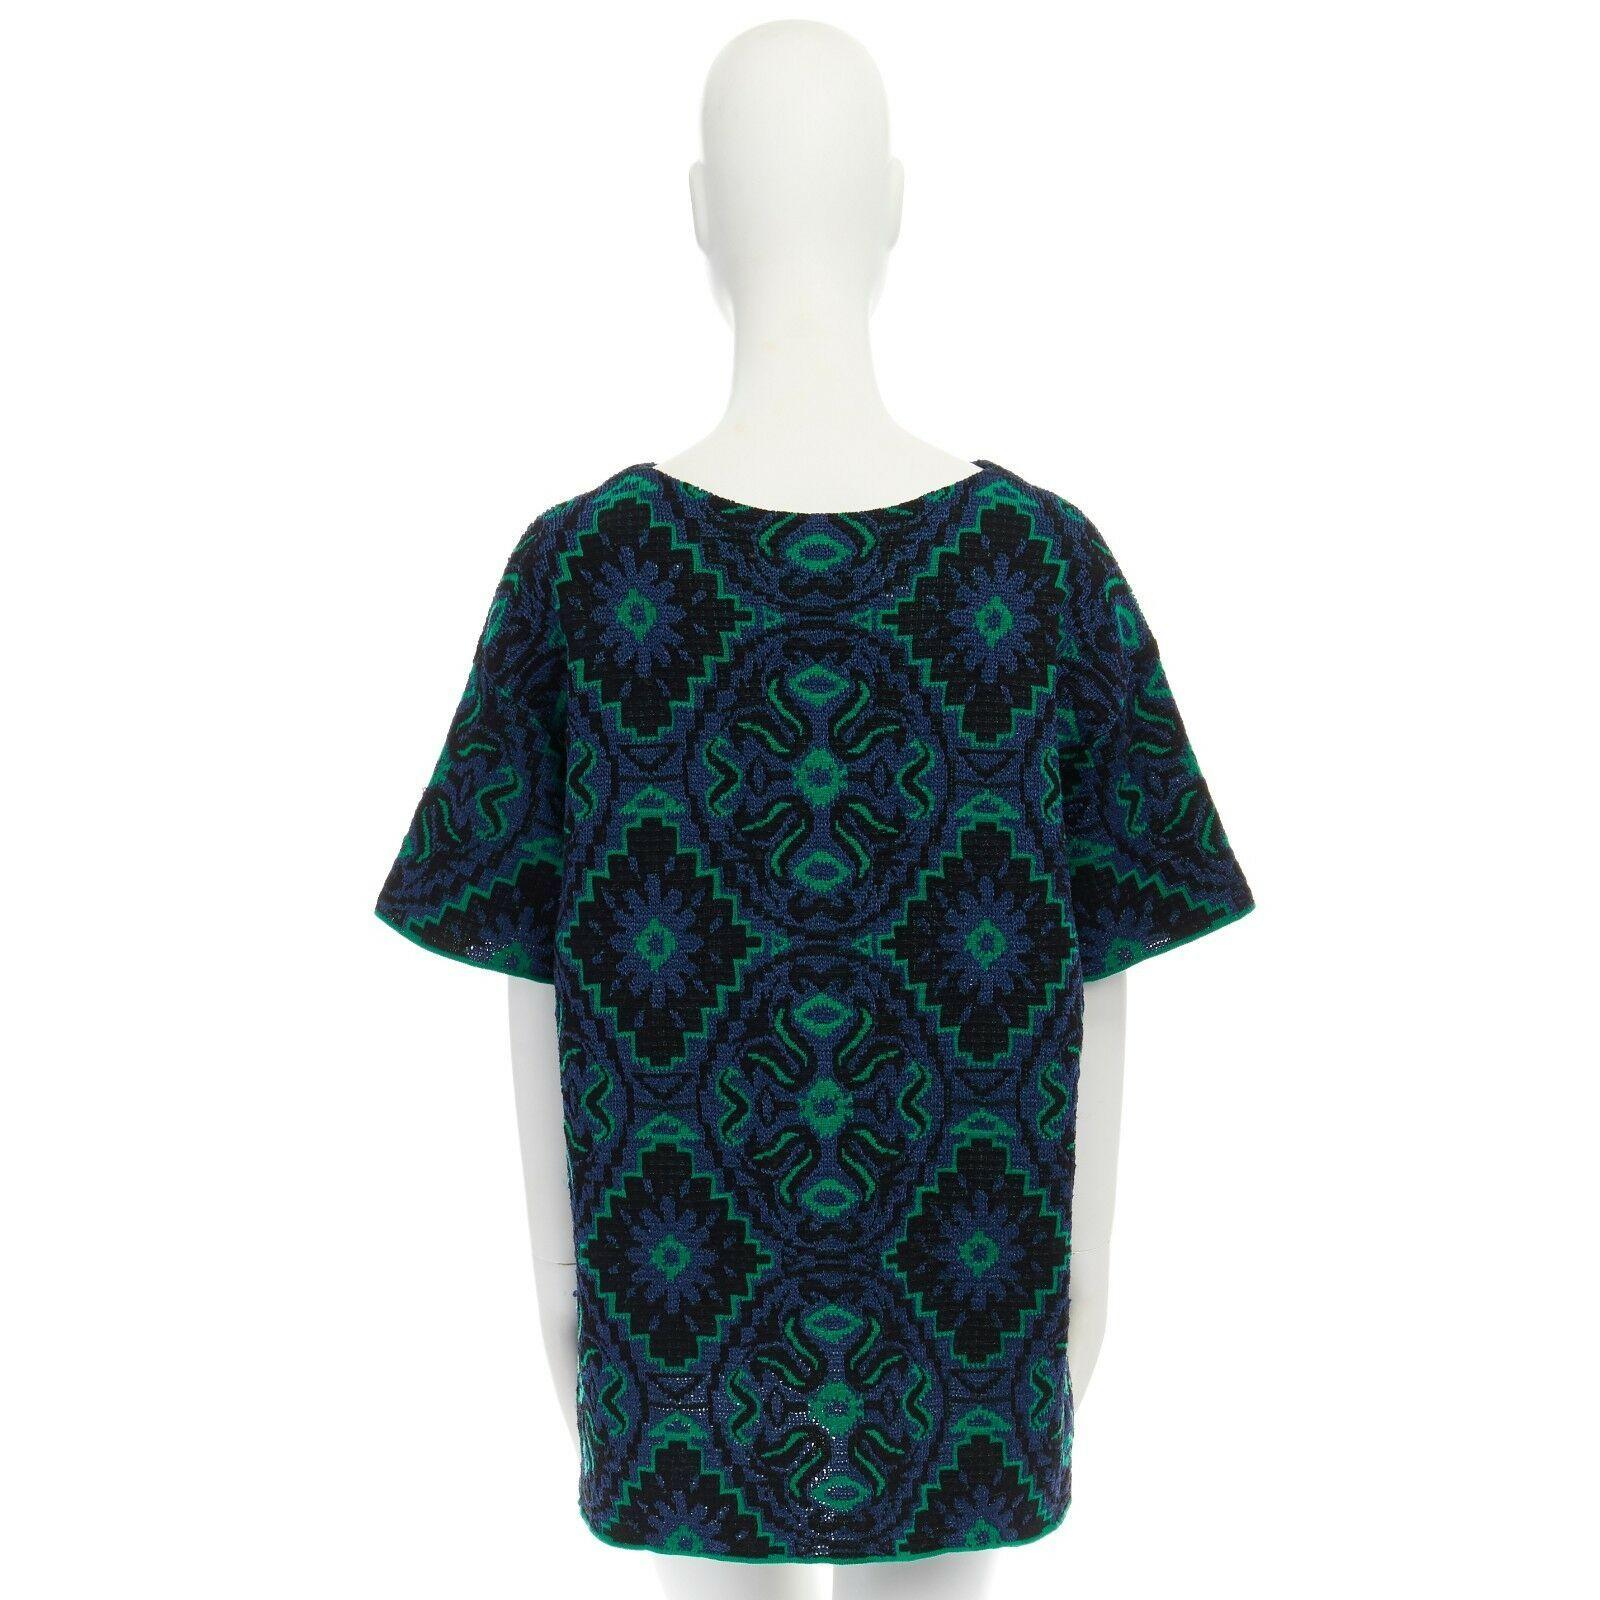 DRIES VAN NOTEN green blue ethnic jacquard knitted boxy short sleeve top M 1